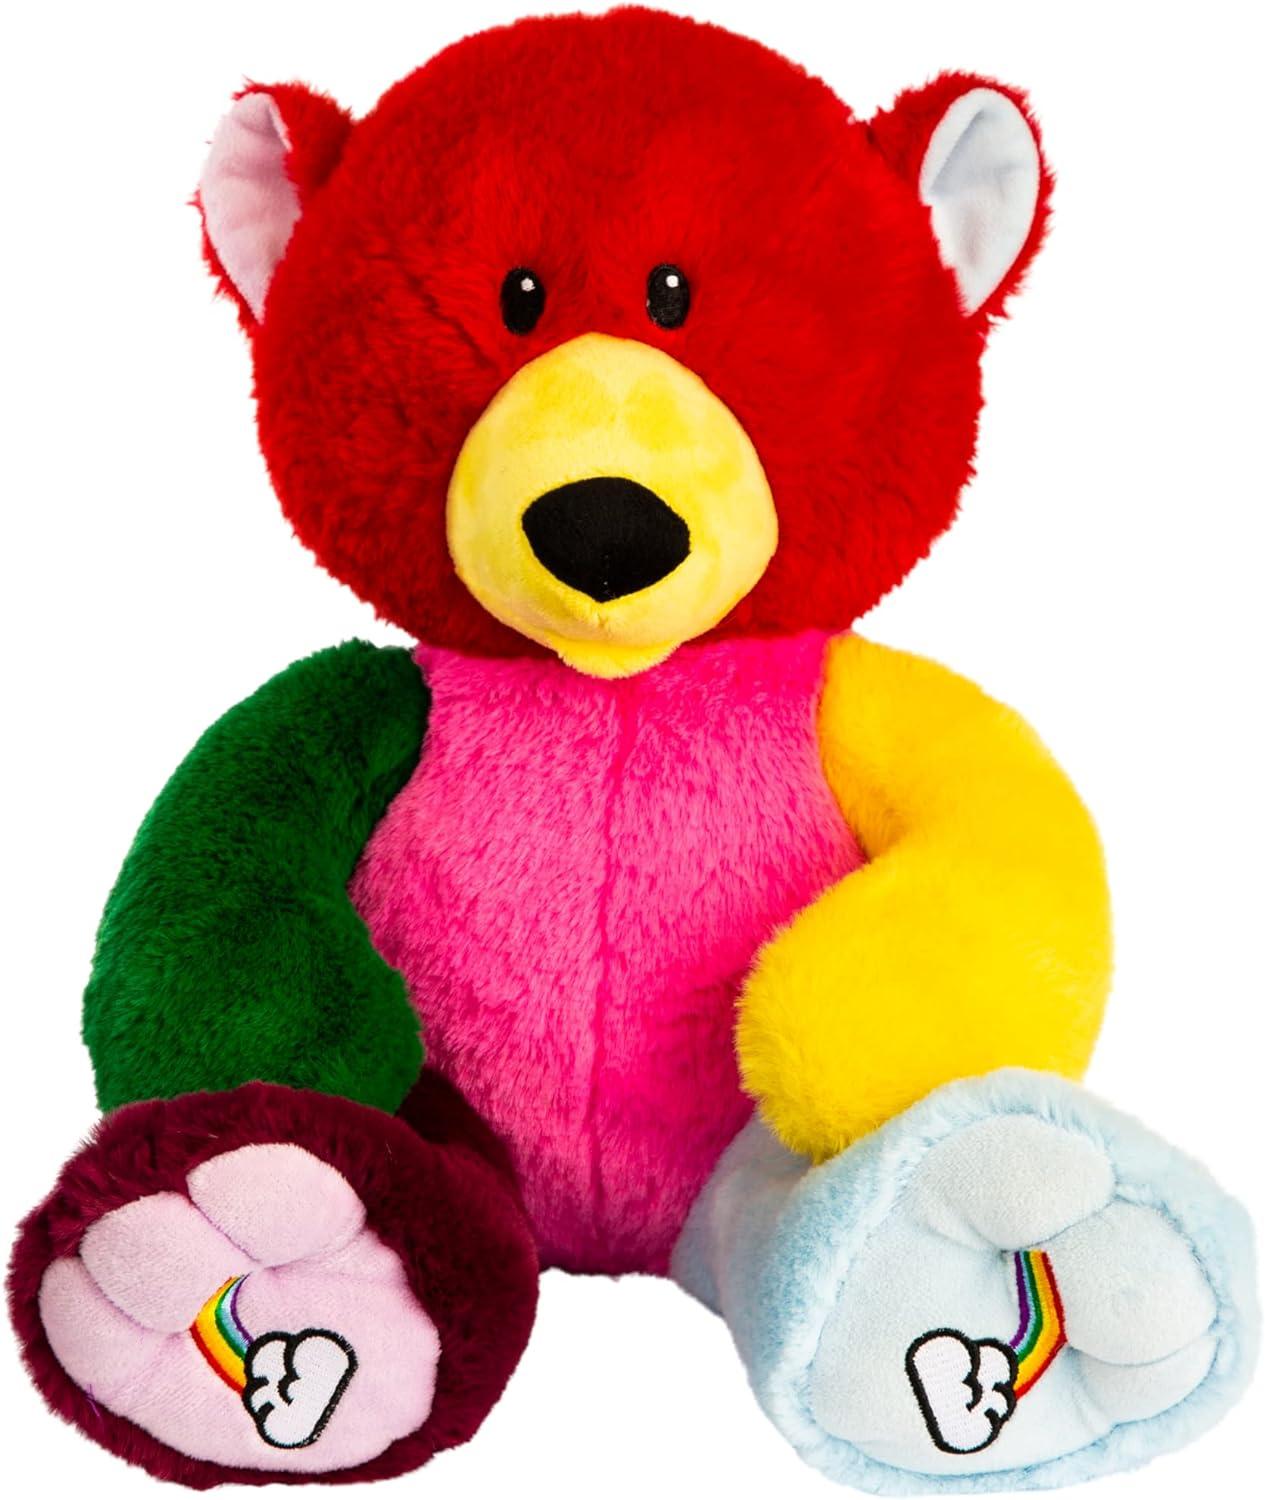 Mood Bears MINI HOPE BEAR Soft Plush Stuffed Animal Toy